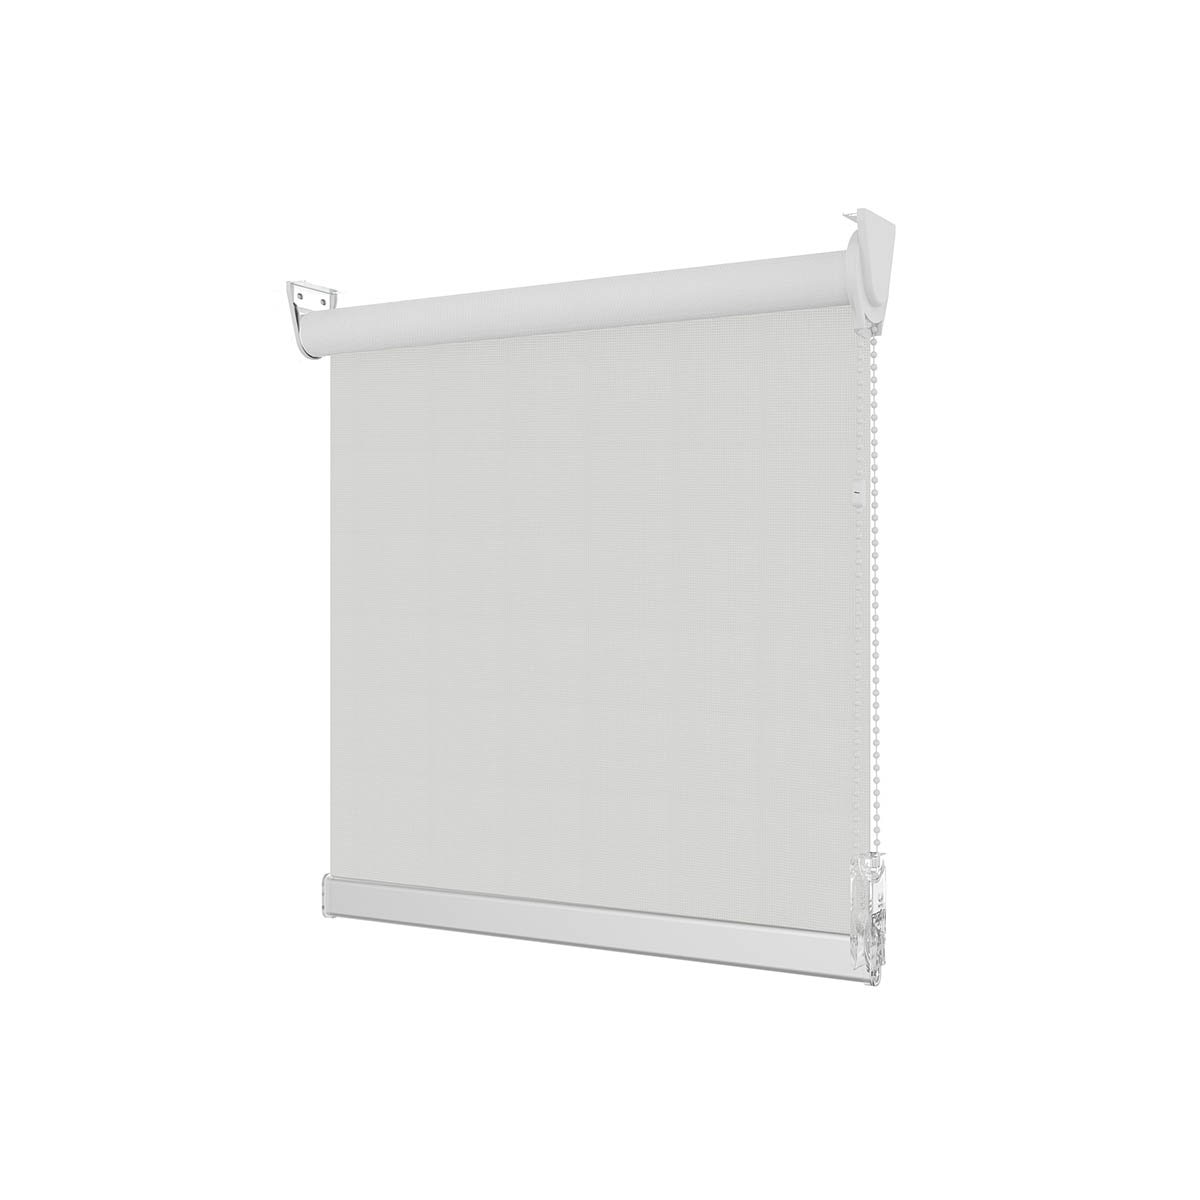 Persiana Enrollable Translucida Screen Phifer 4500 New 1.40 X 2.50 Blanco Classic